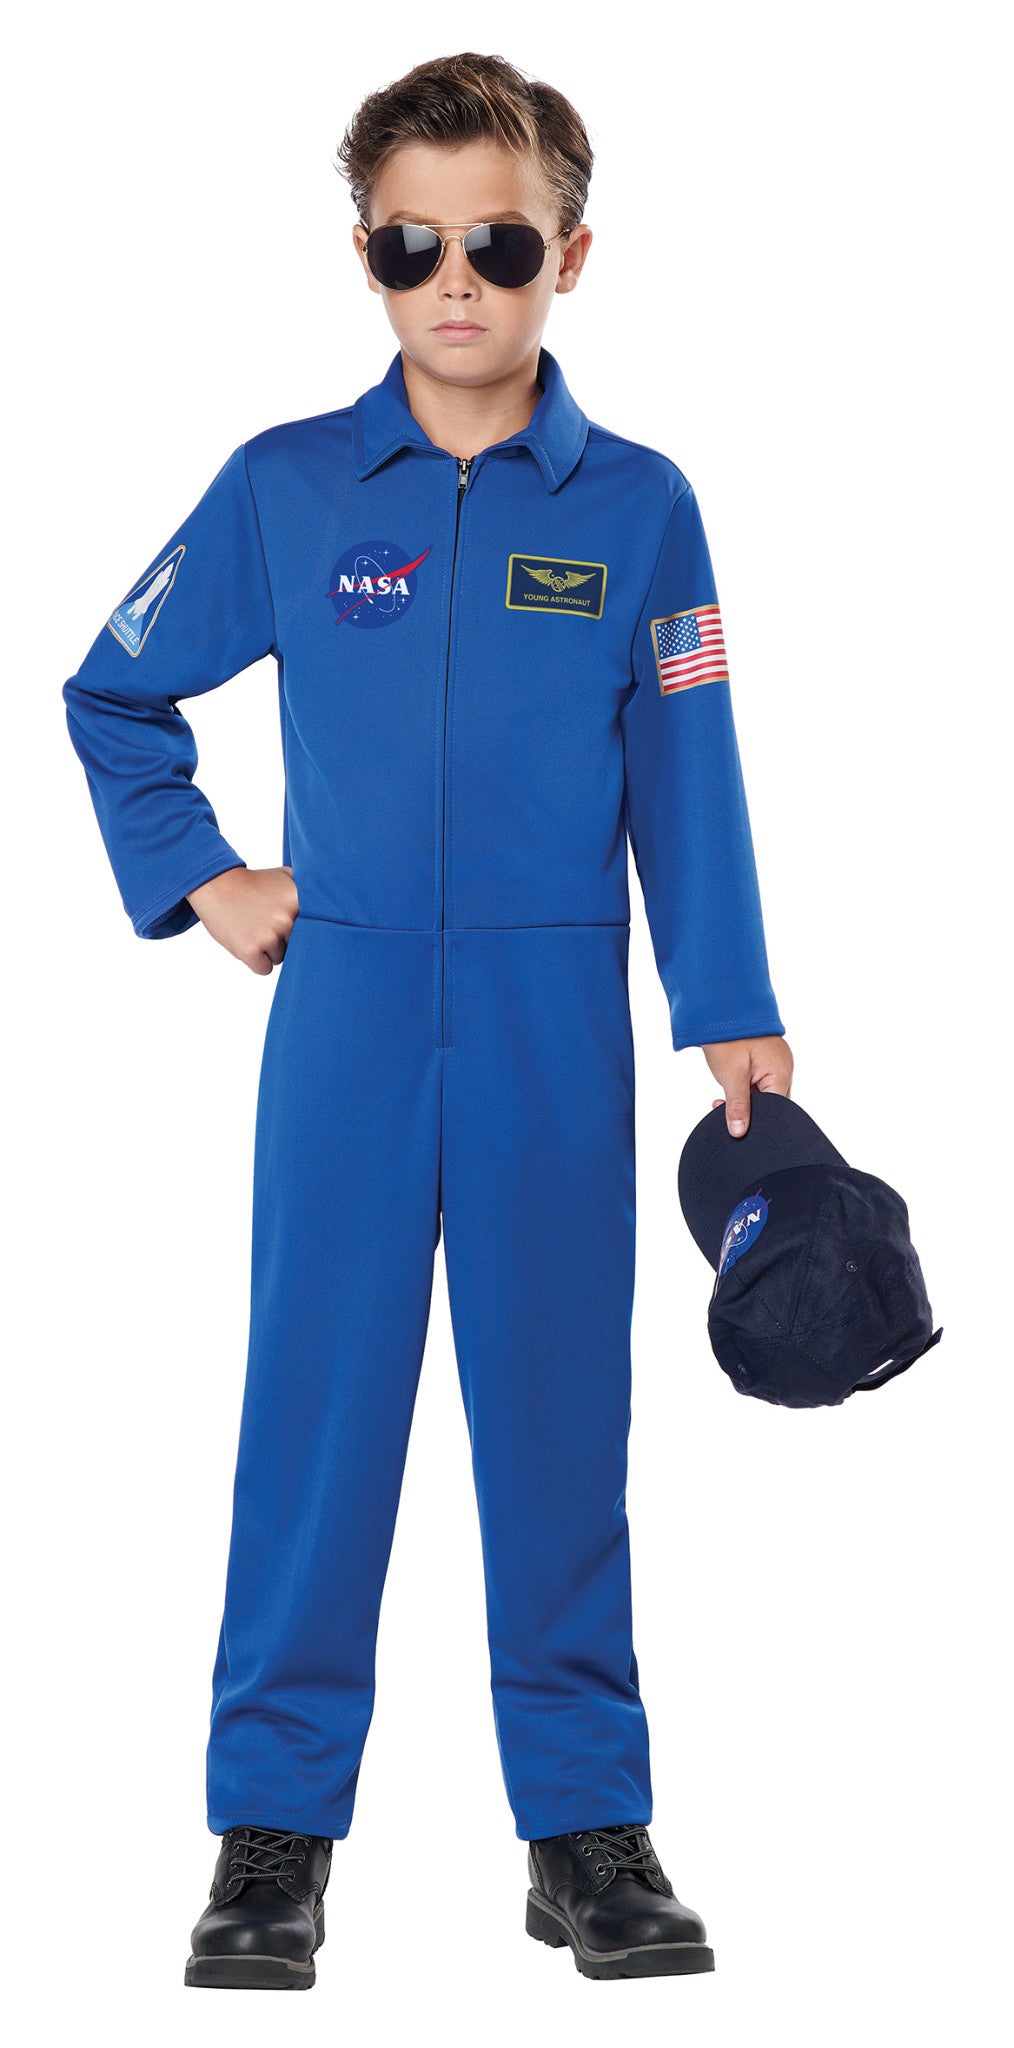 NASA Jumpsuit